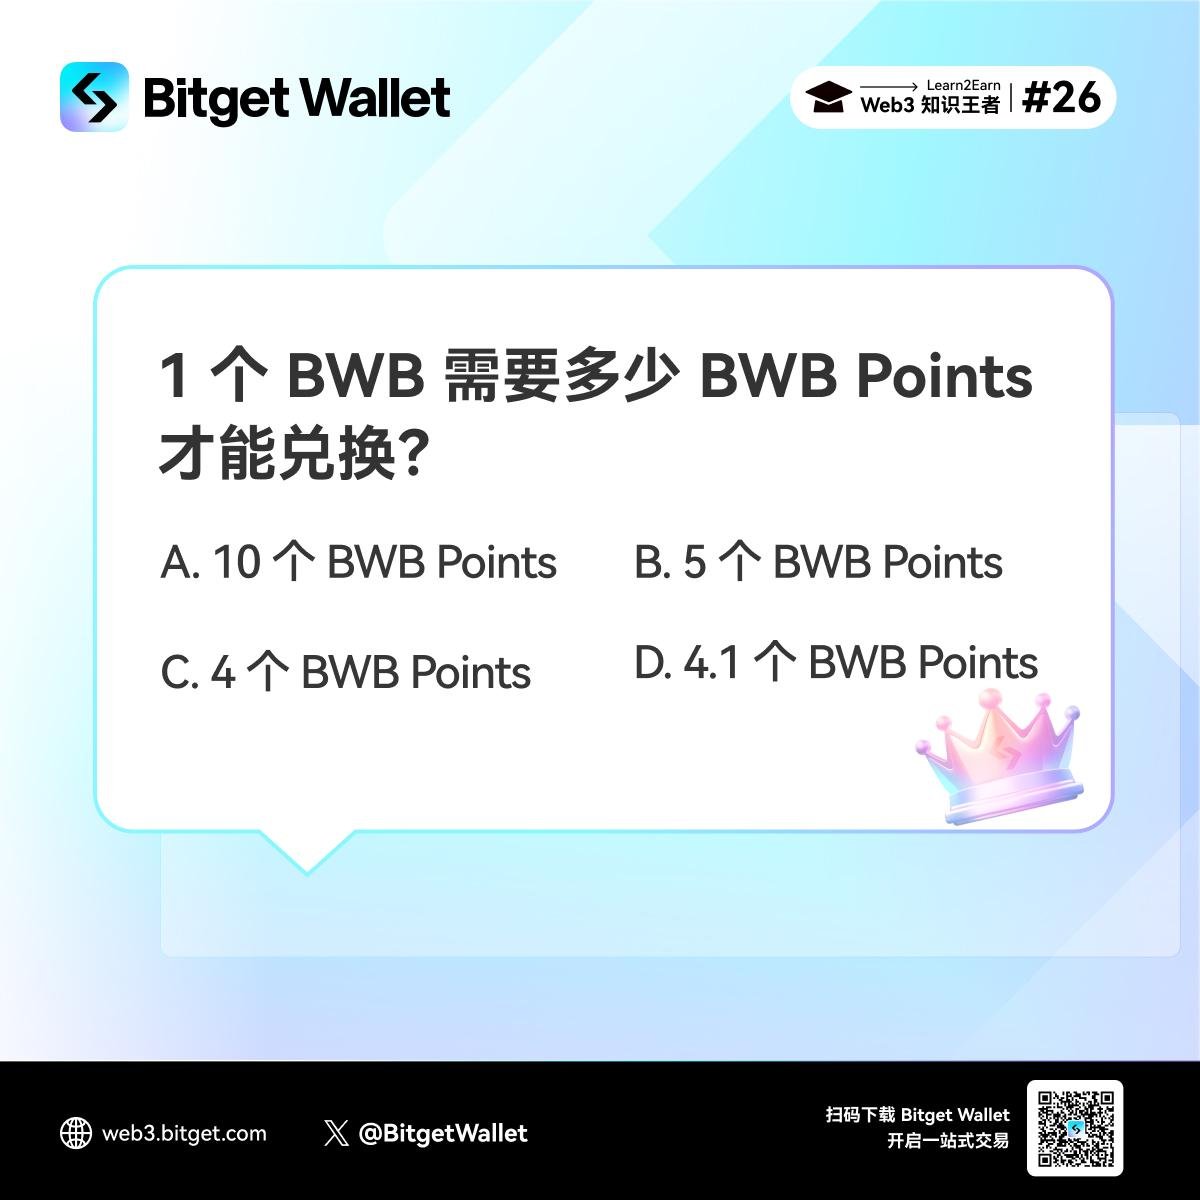 ✨ Bitget Wallet “Web3 知识王者”第二十六期！
#BWBPoints 兑换 $BWB 即将开启，你准备好了吗？

本期单选题。请在评论区留下你的正确答案+EVM地址，答对的抽 3 个人空投 5-10 GASU奖励！